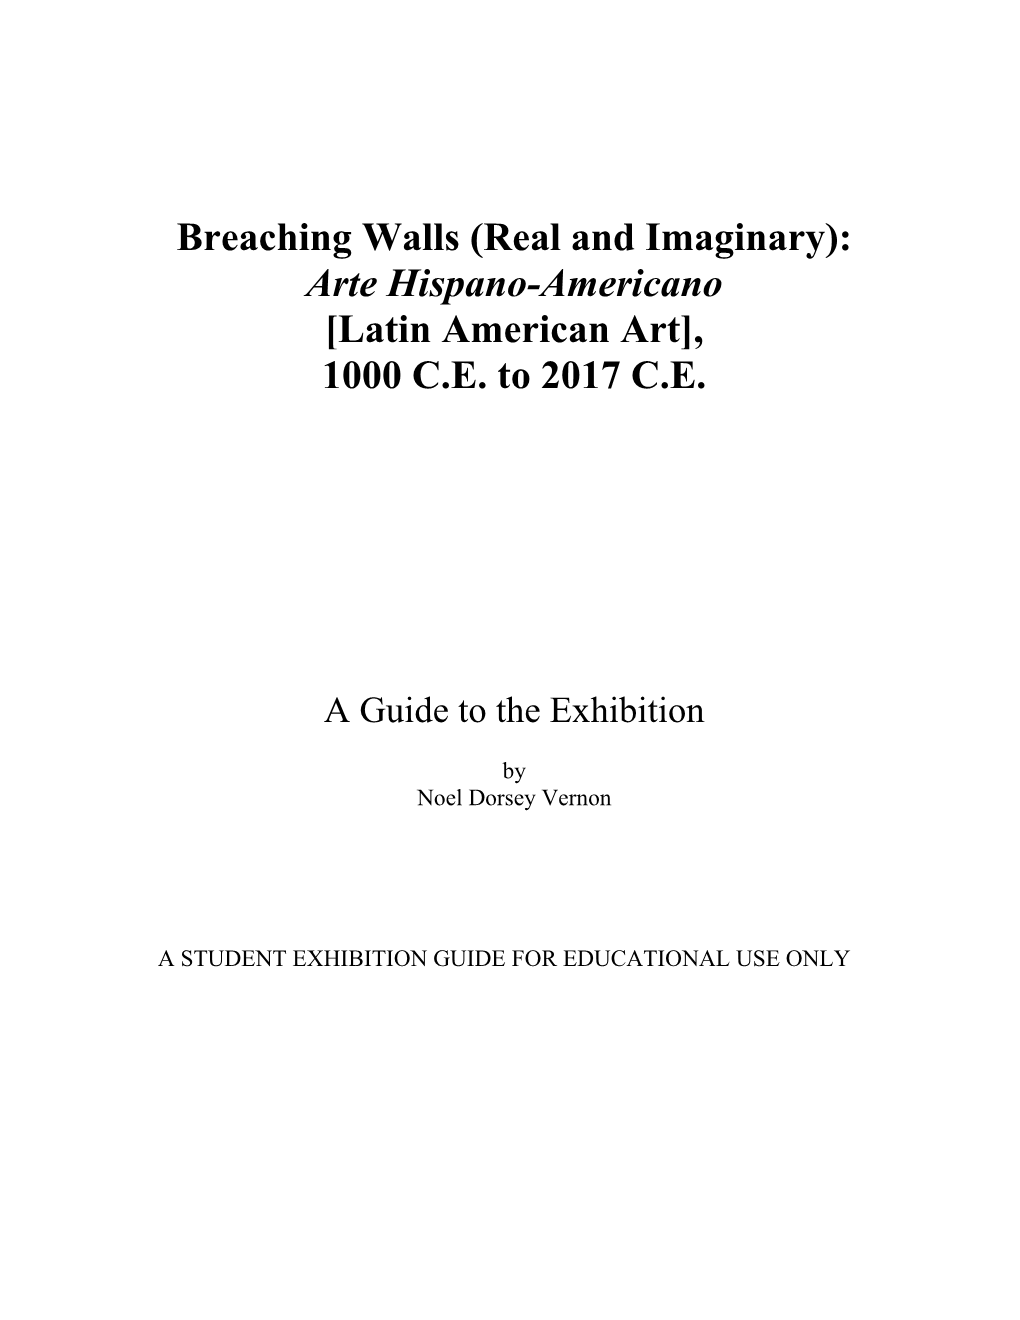 Breaching Walls (Real and Imaginary): Arte Hispano-Americano [Latin American Art], 1000 C.E